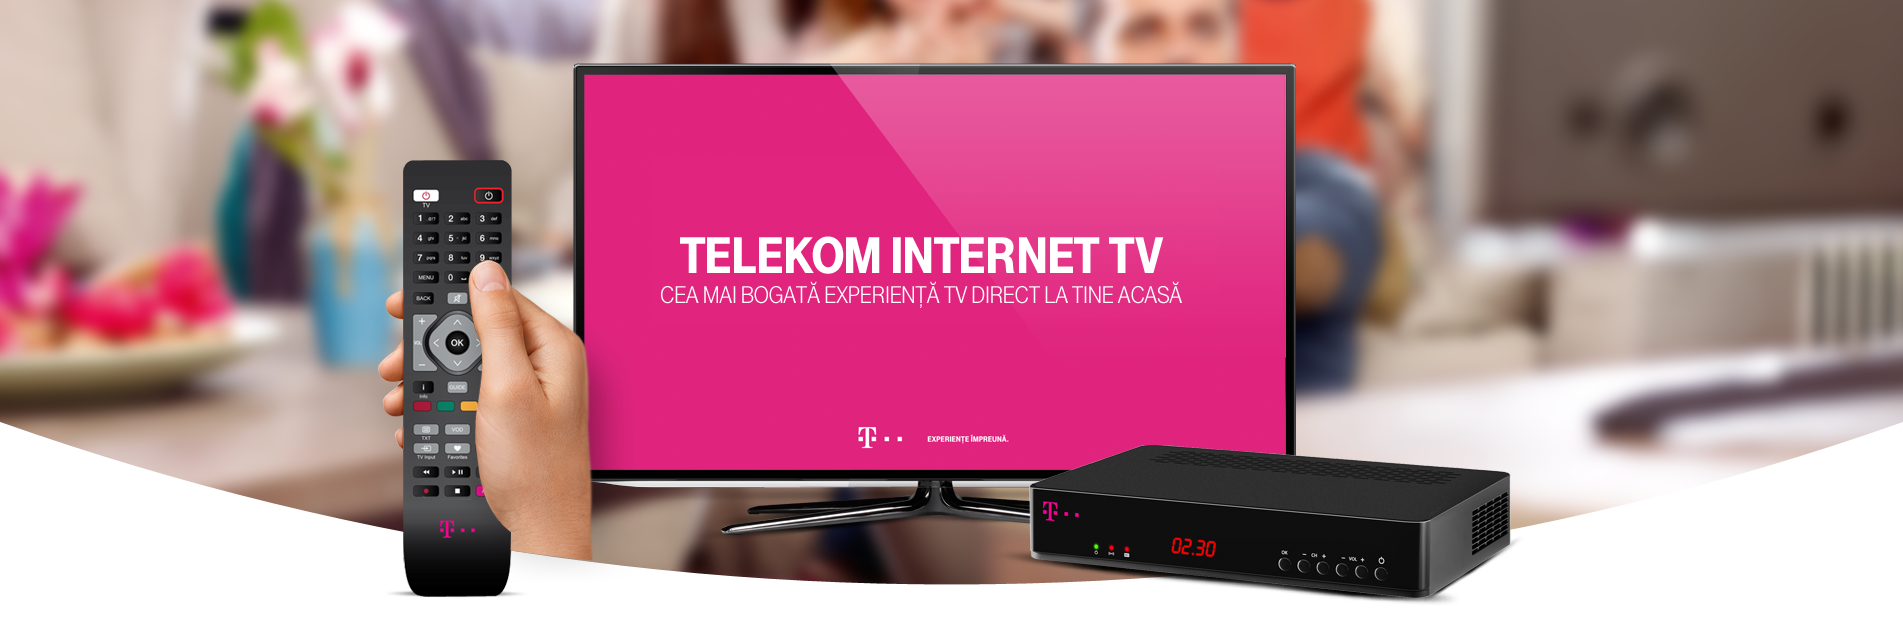 Telekom Internet TV